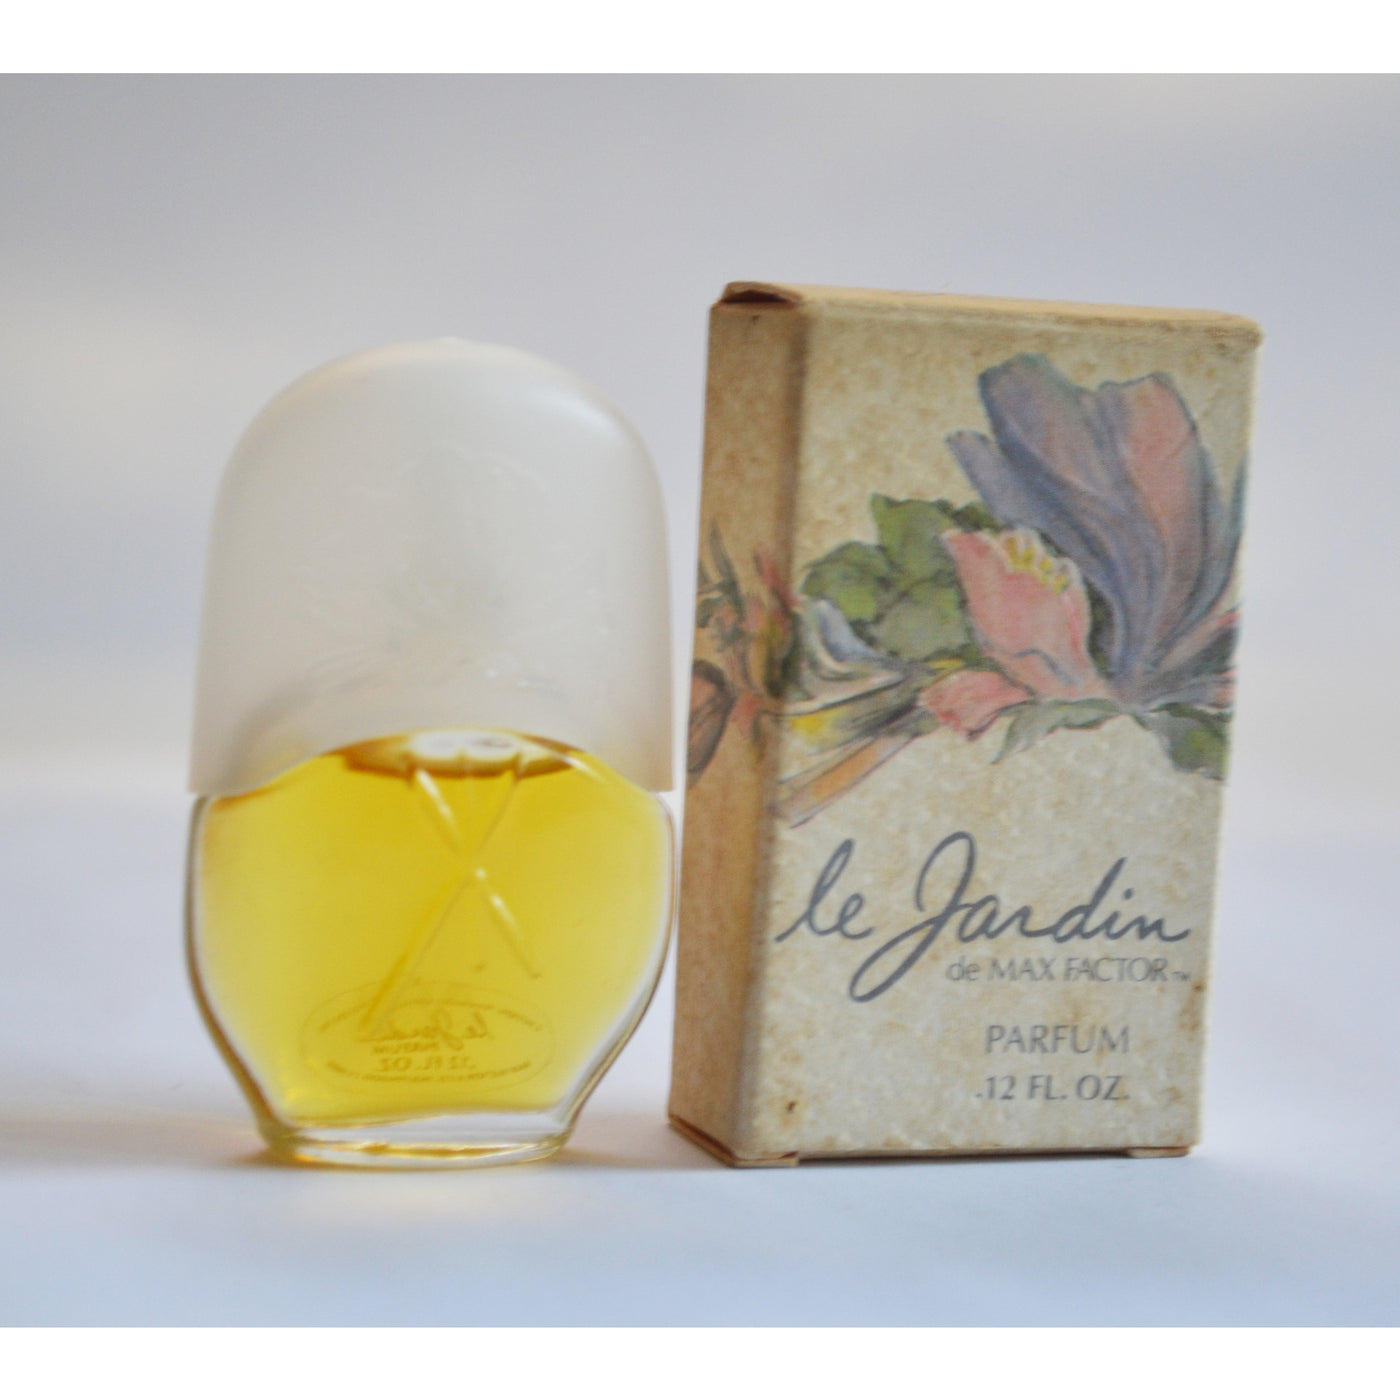 Vintage Le Jardin Parfum Mini By Max Factor